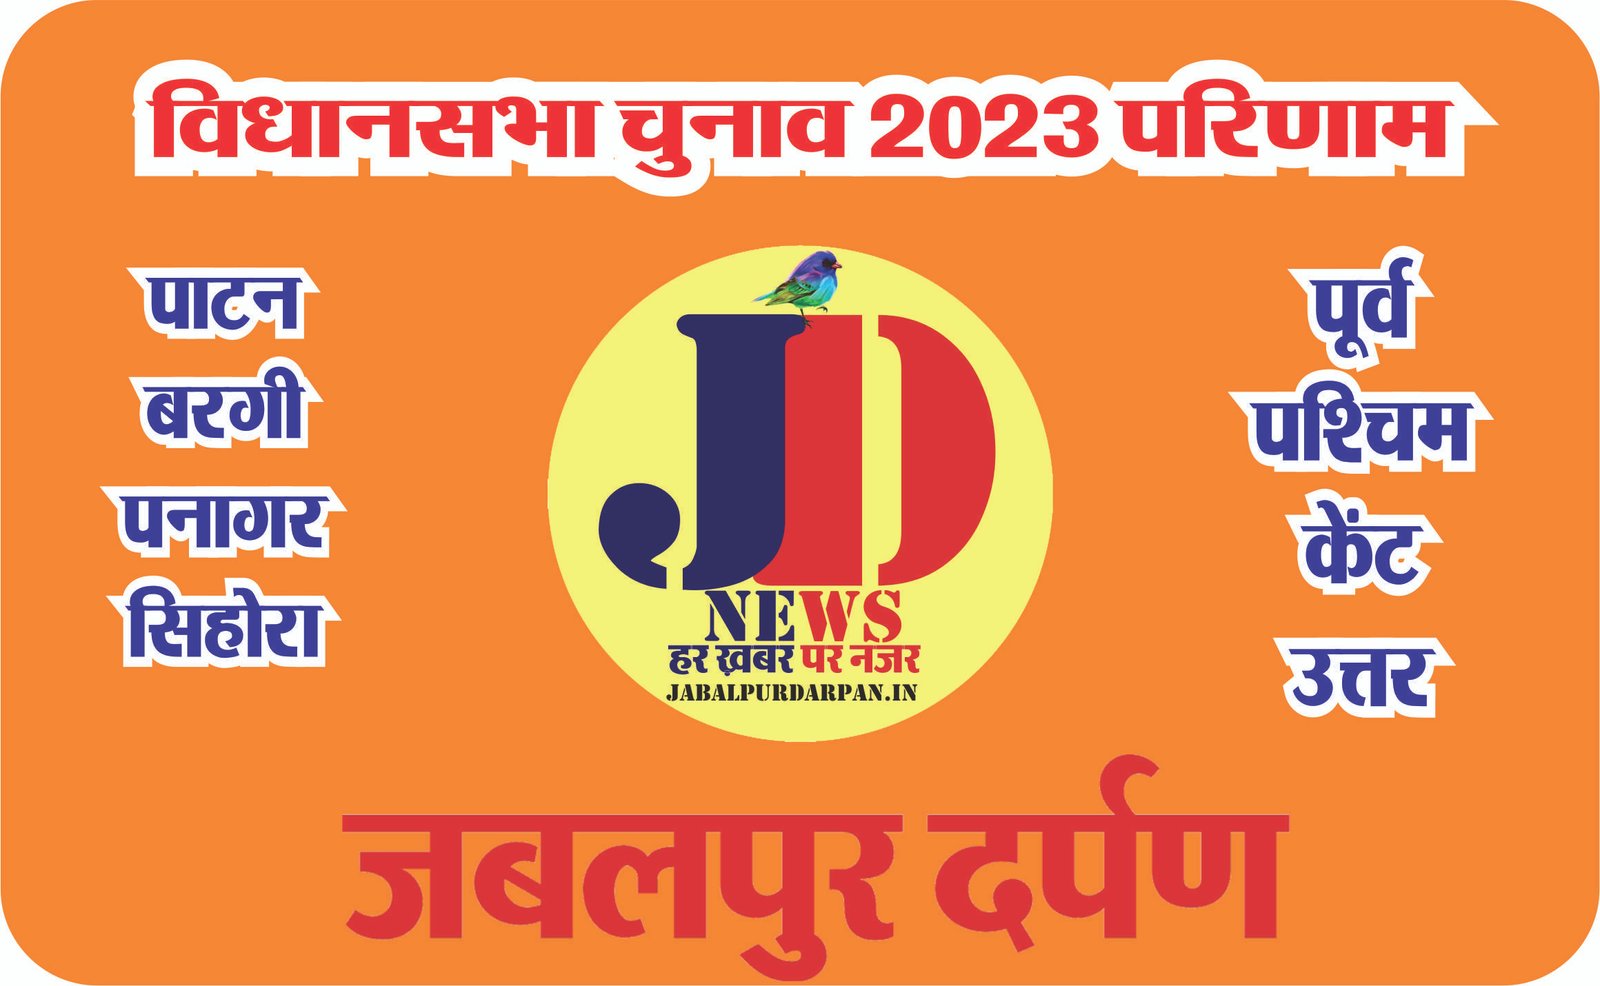 jabalpur darpan विधानसभा चुनाव 2023 परिणाम